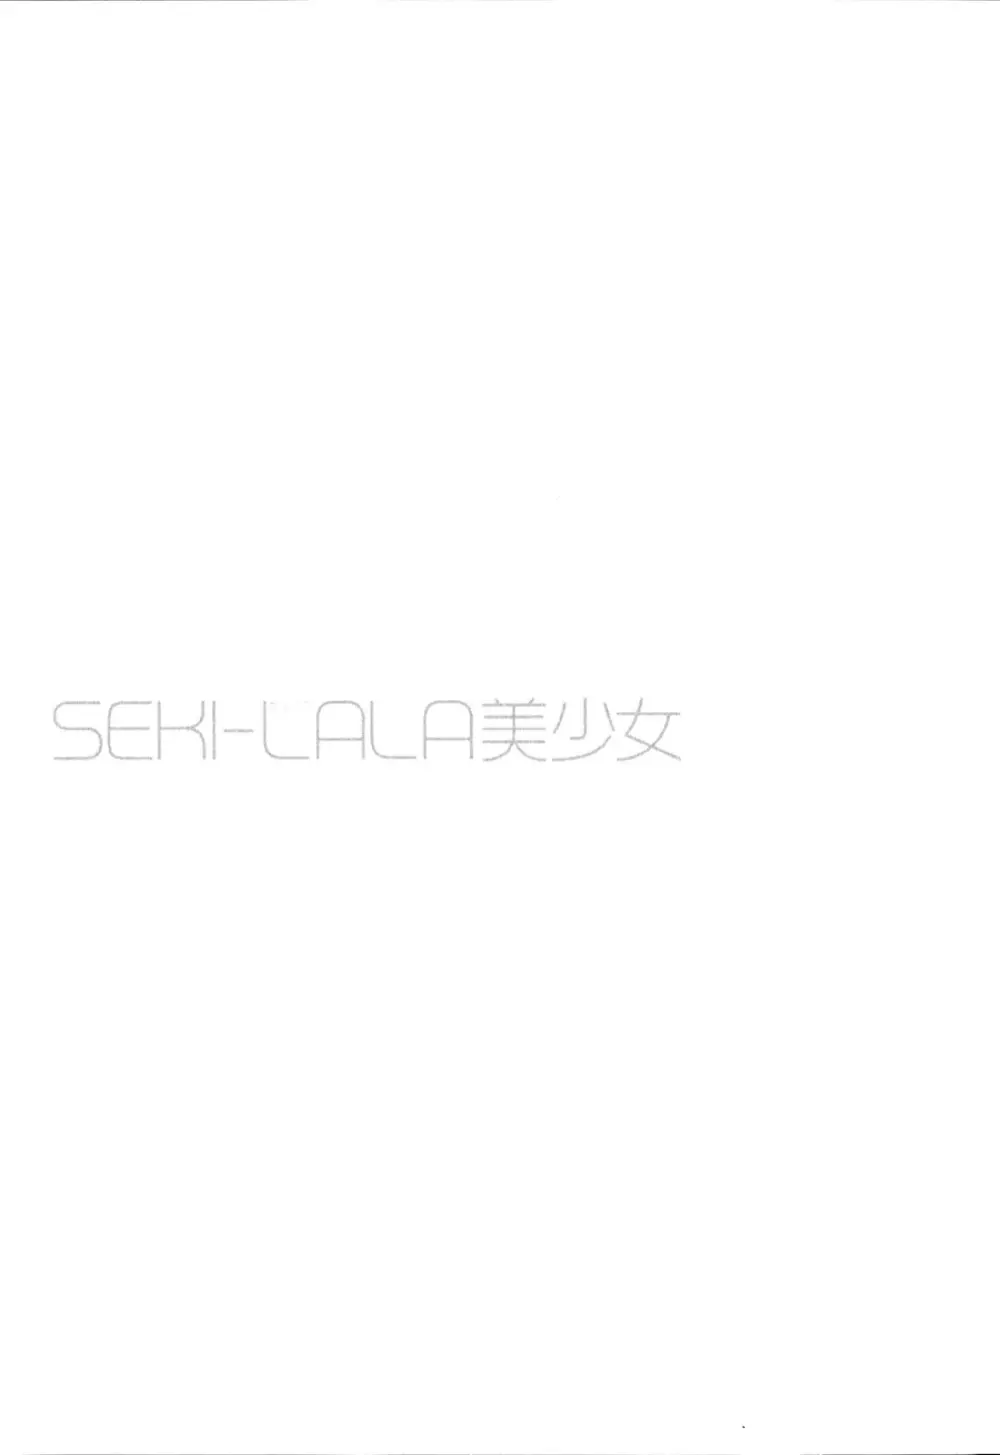 SEKI-LALA美少女 106ページ